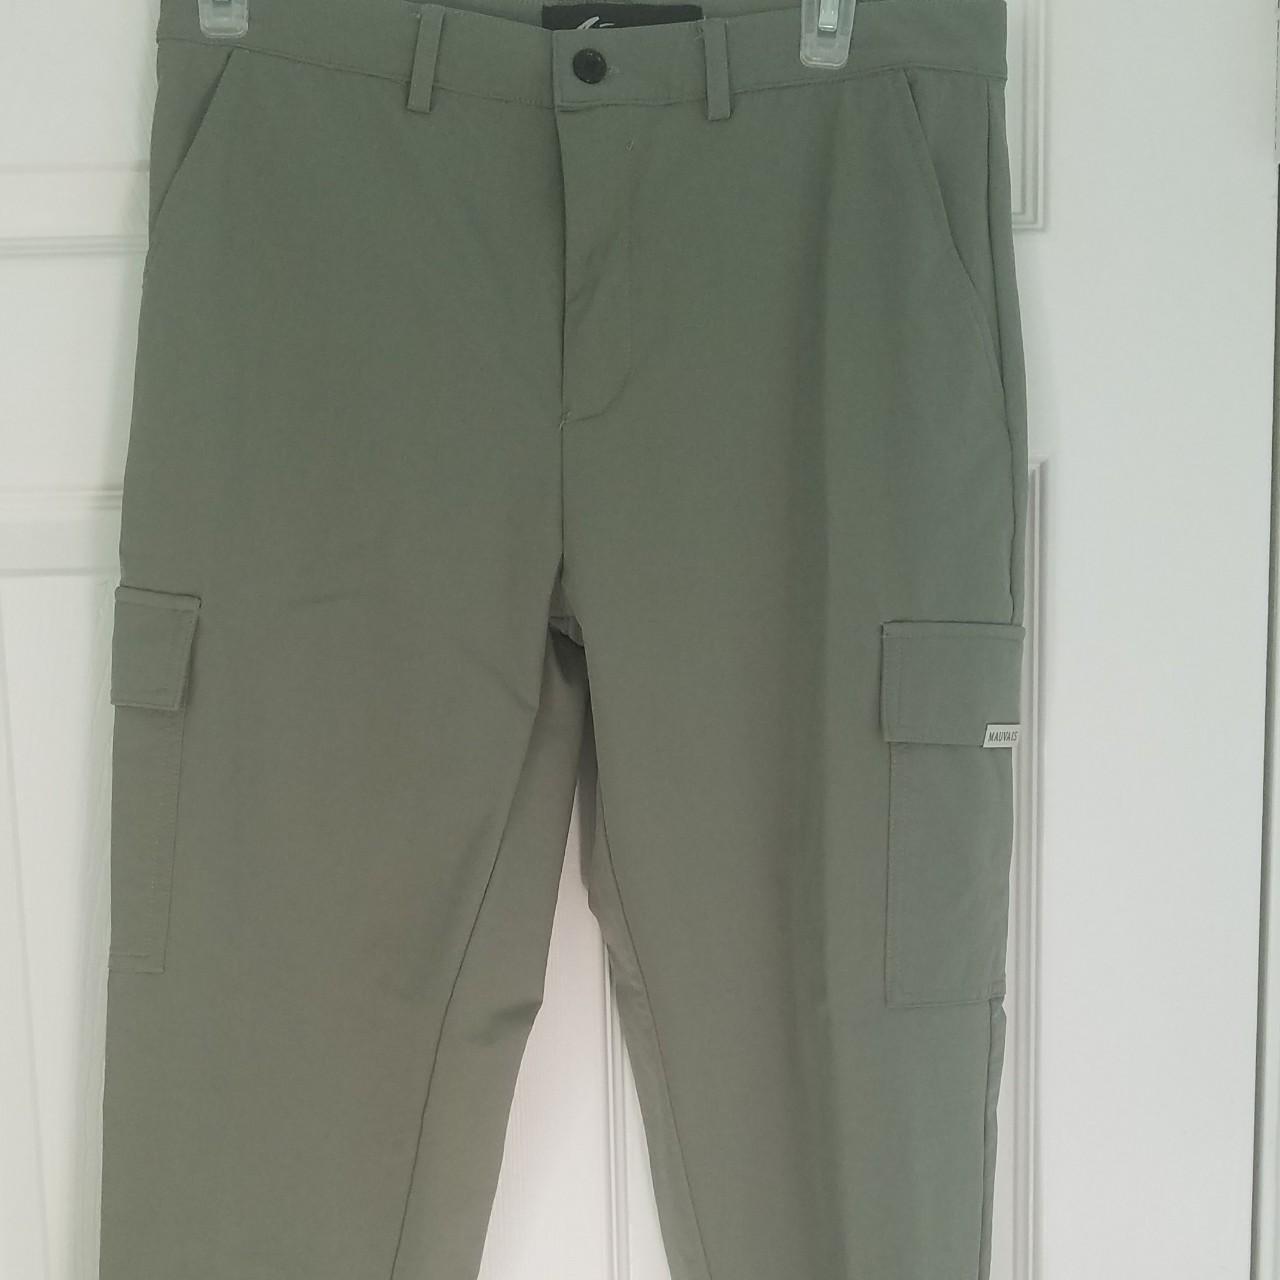 Product Image 1 - Mauvais green pants size 30